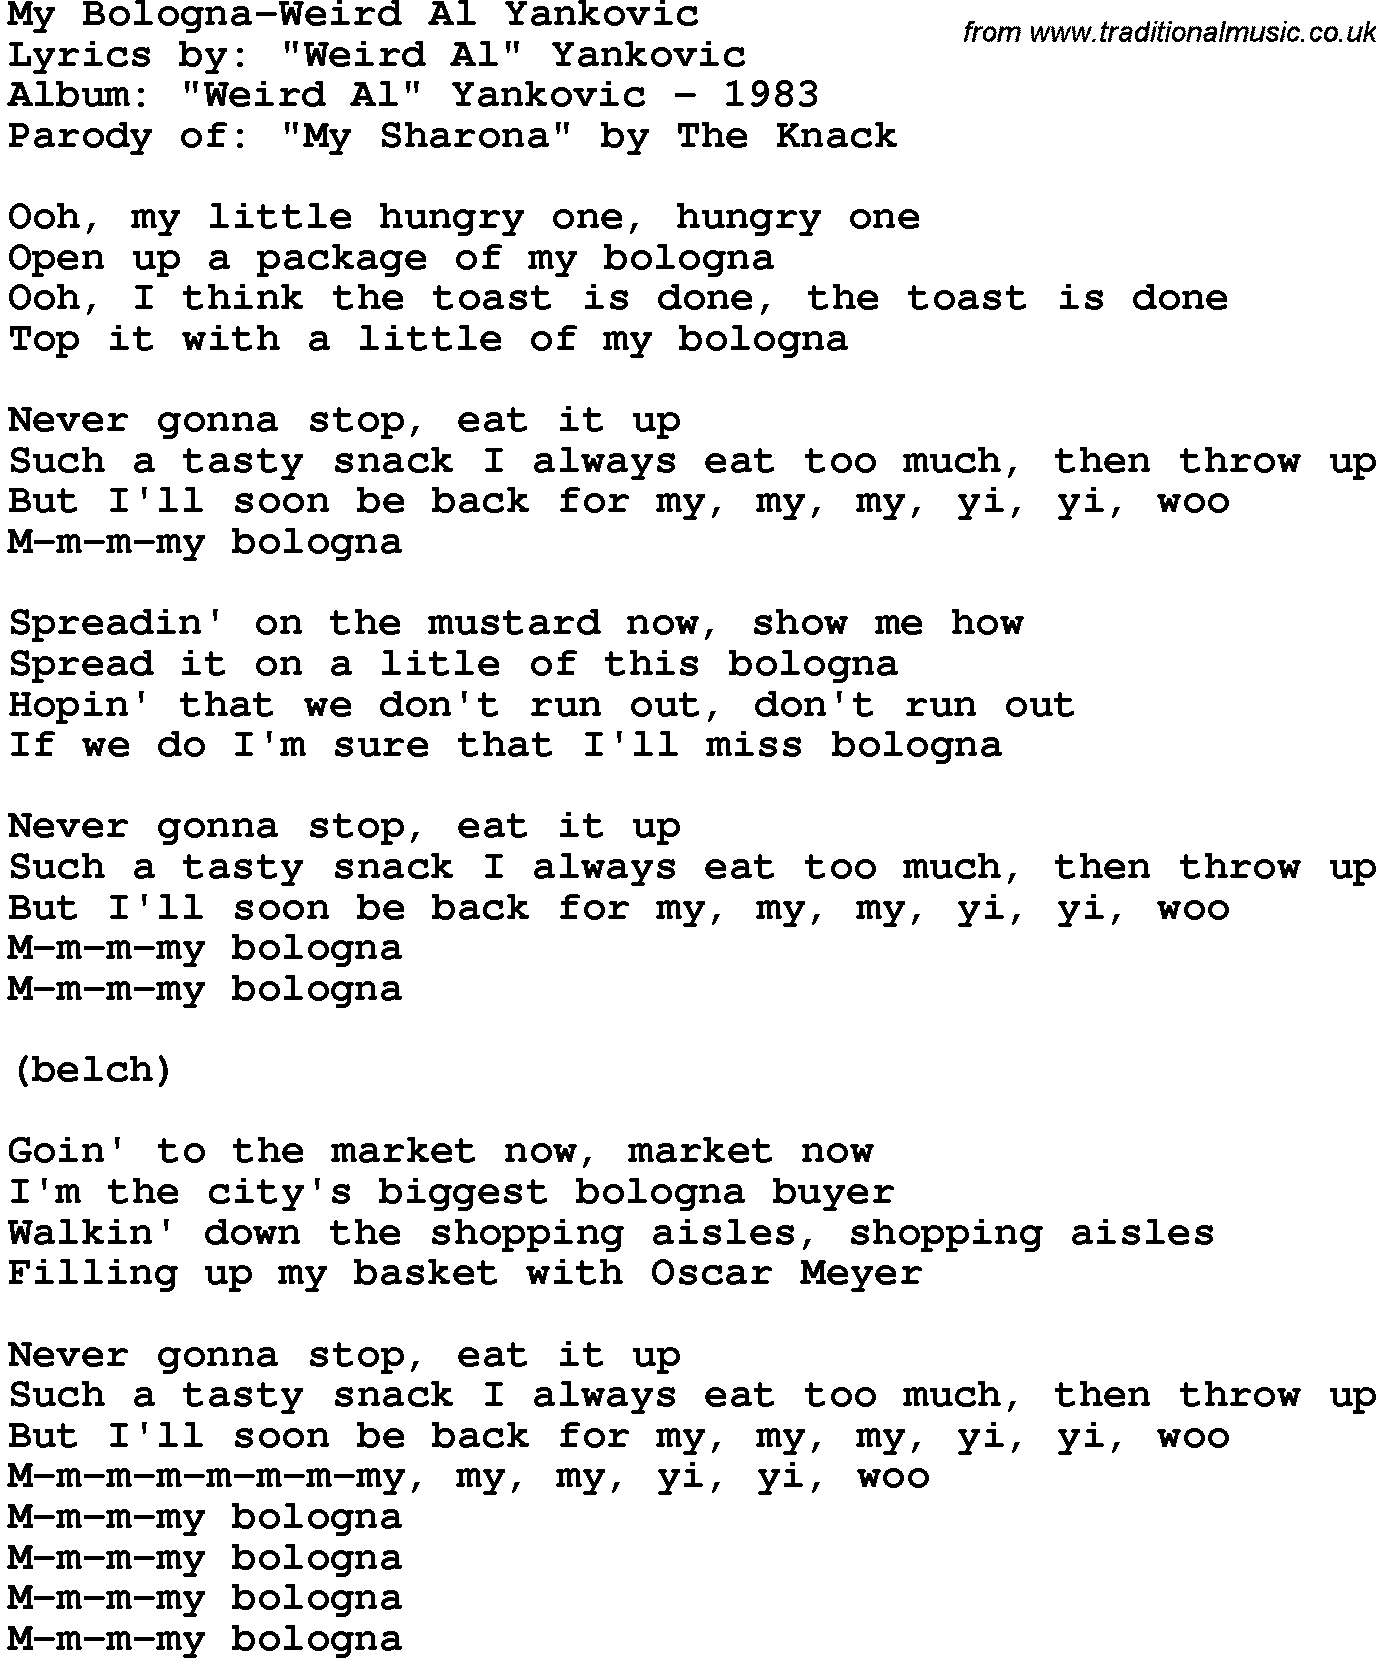 Novelty song: My Bologna-Weird Al Yankovic lyrics